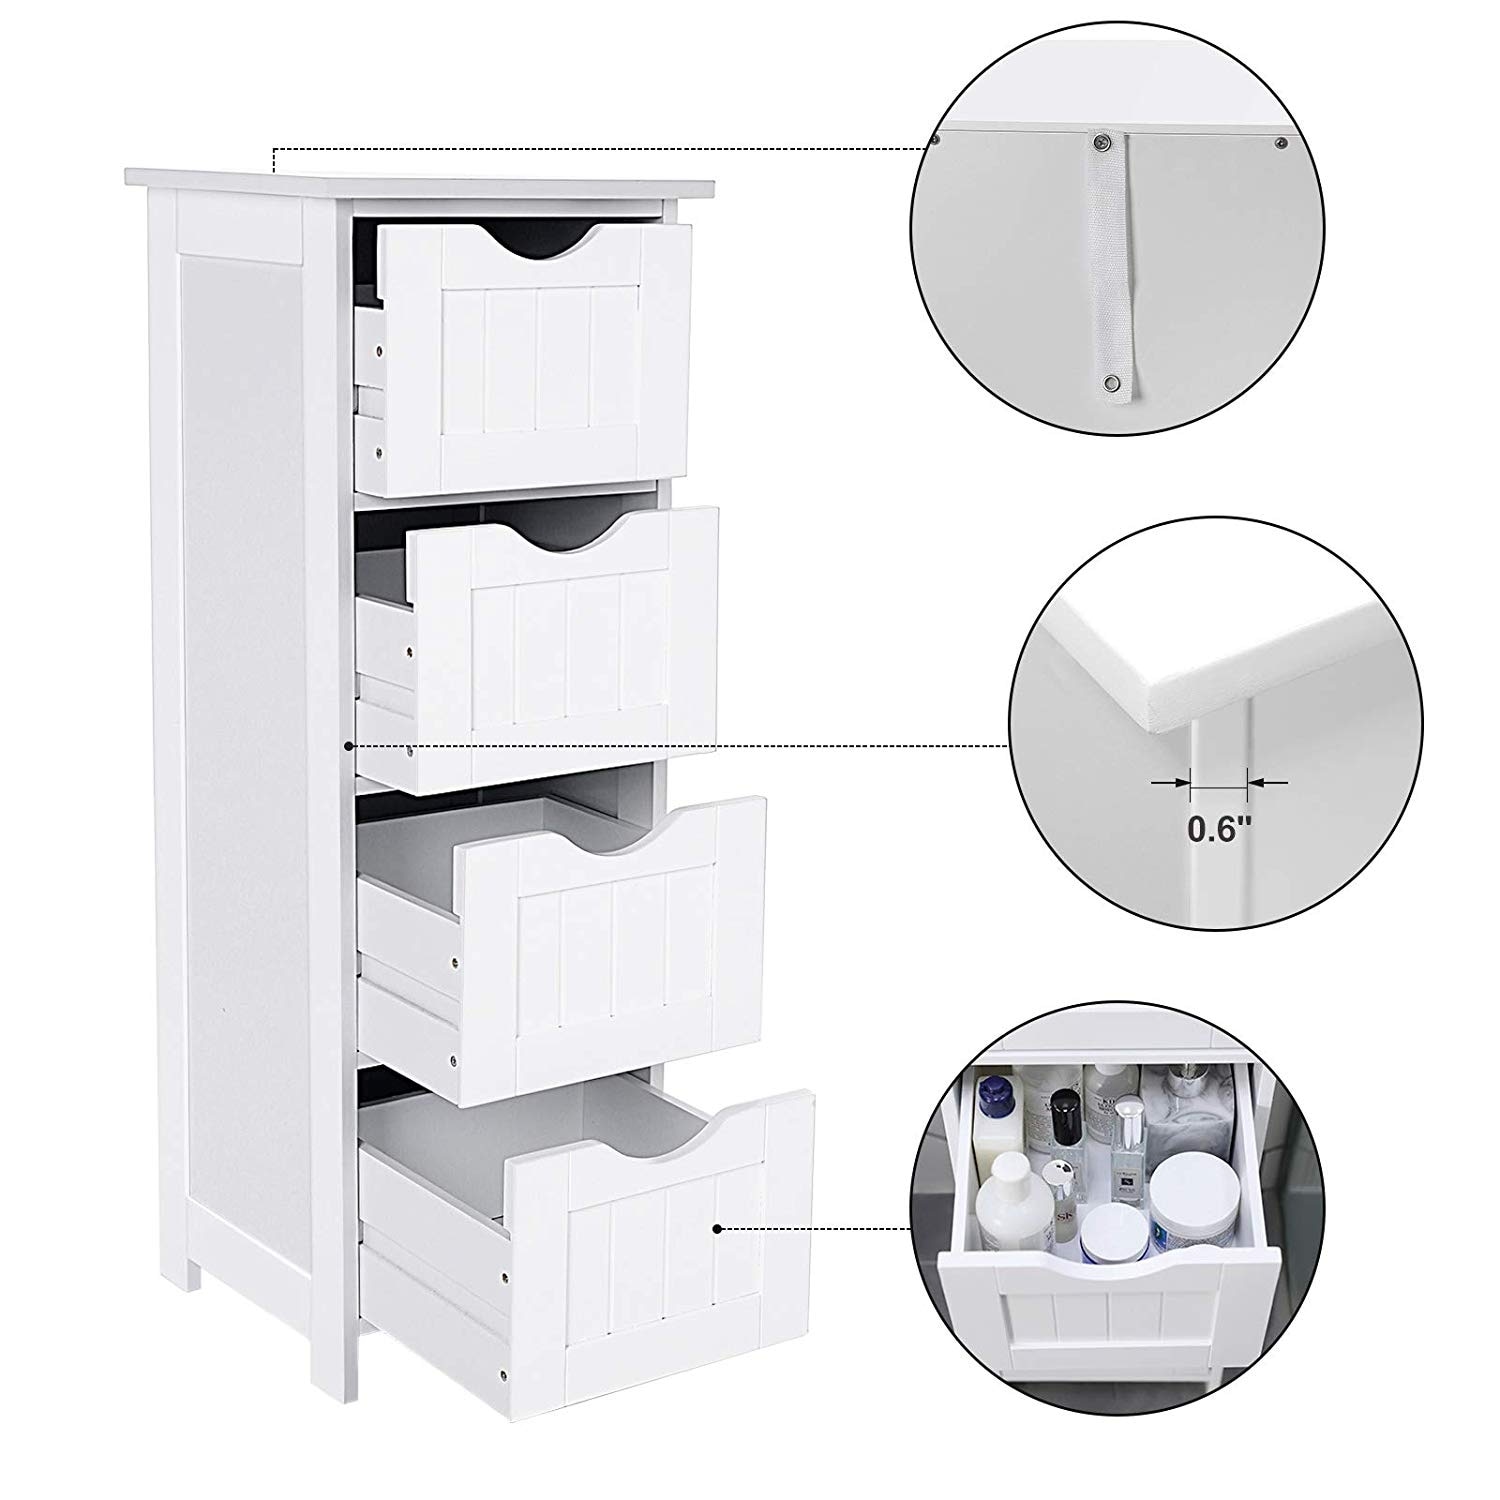 https://ak1.ostkcdn.com/images/products/is/images/direct/b5f355881b99ad7badd3cbaed1b7aa9cf48de9db/White-Bathroom-Storage-Cabinet.jpg